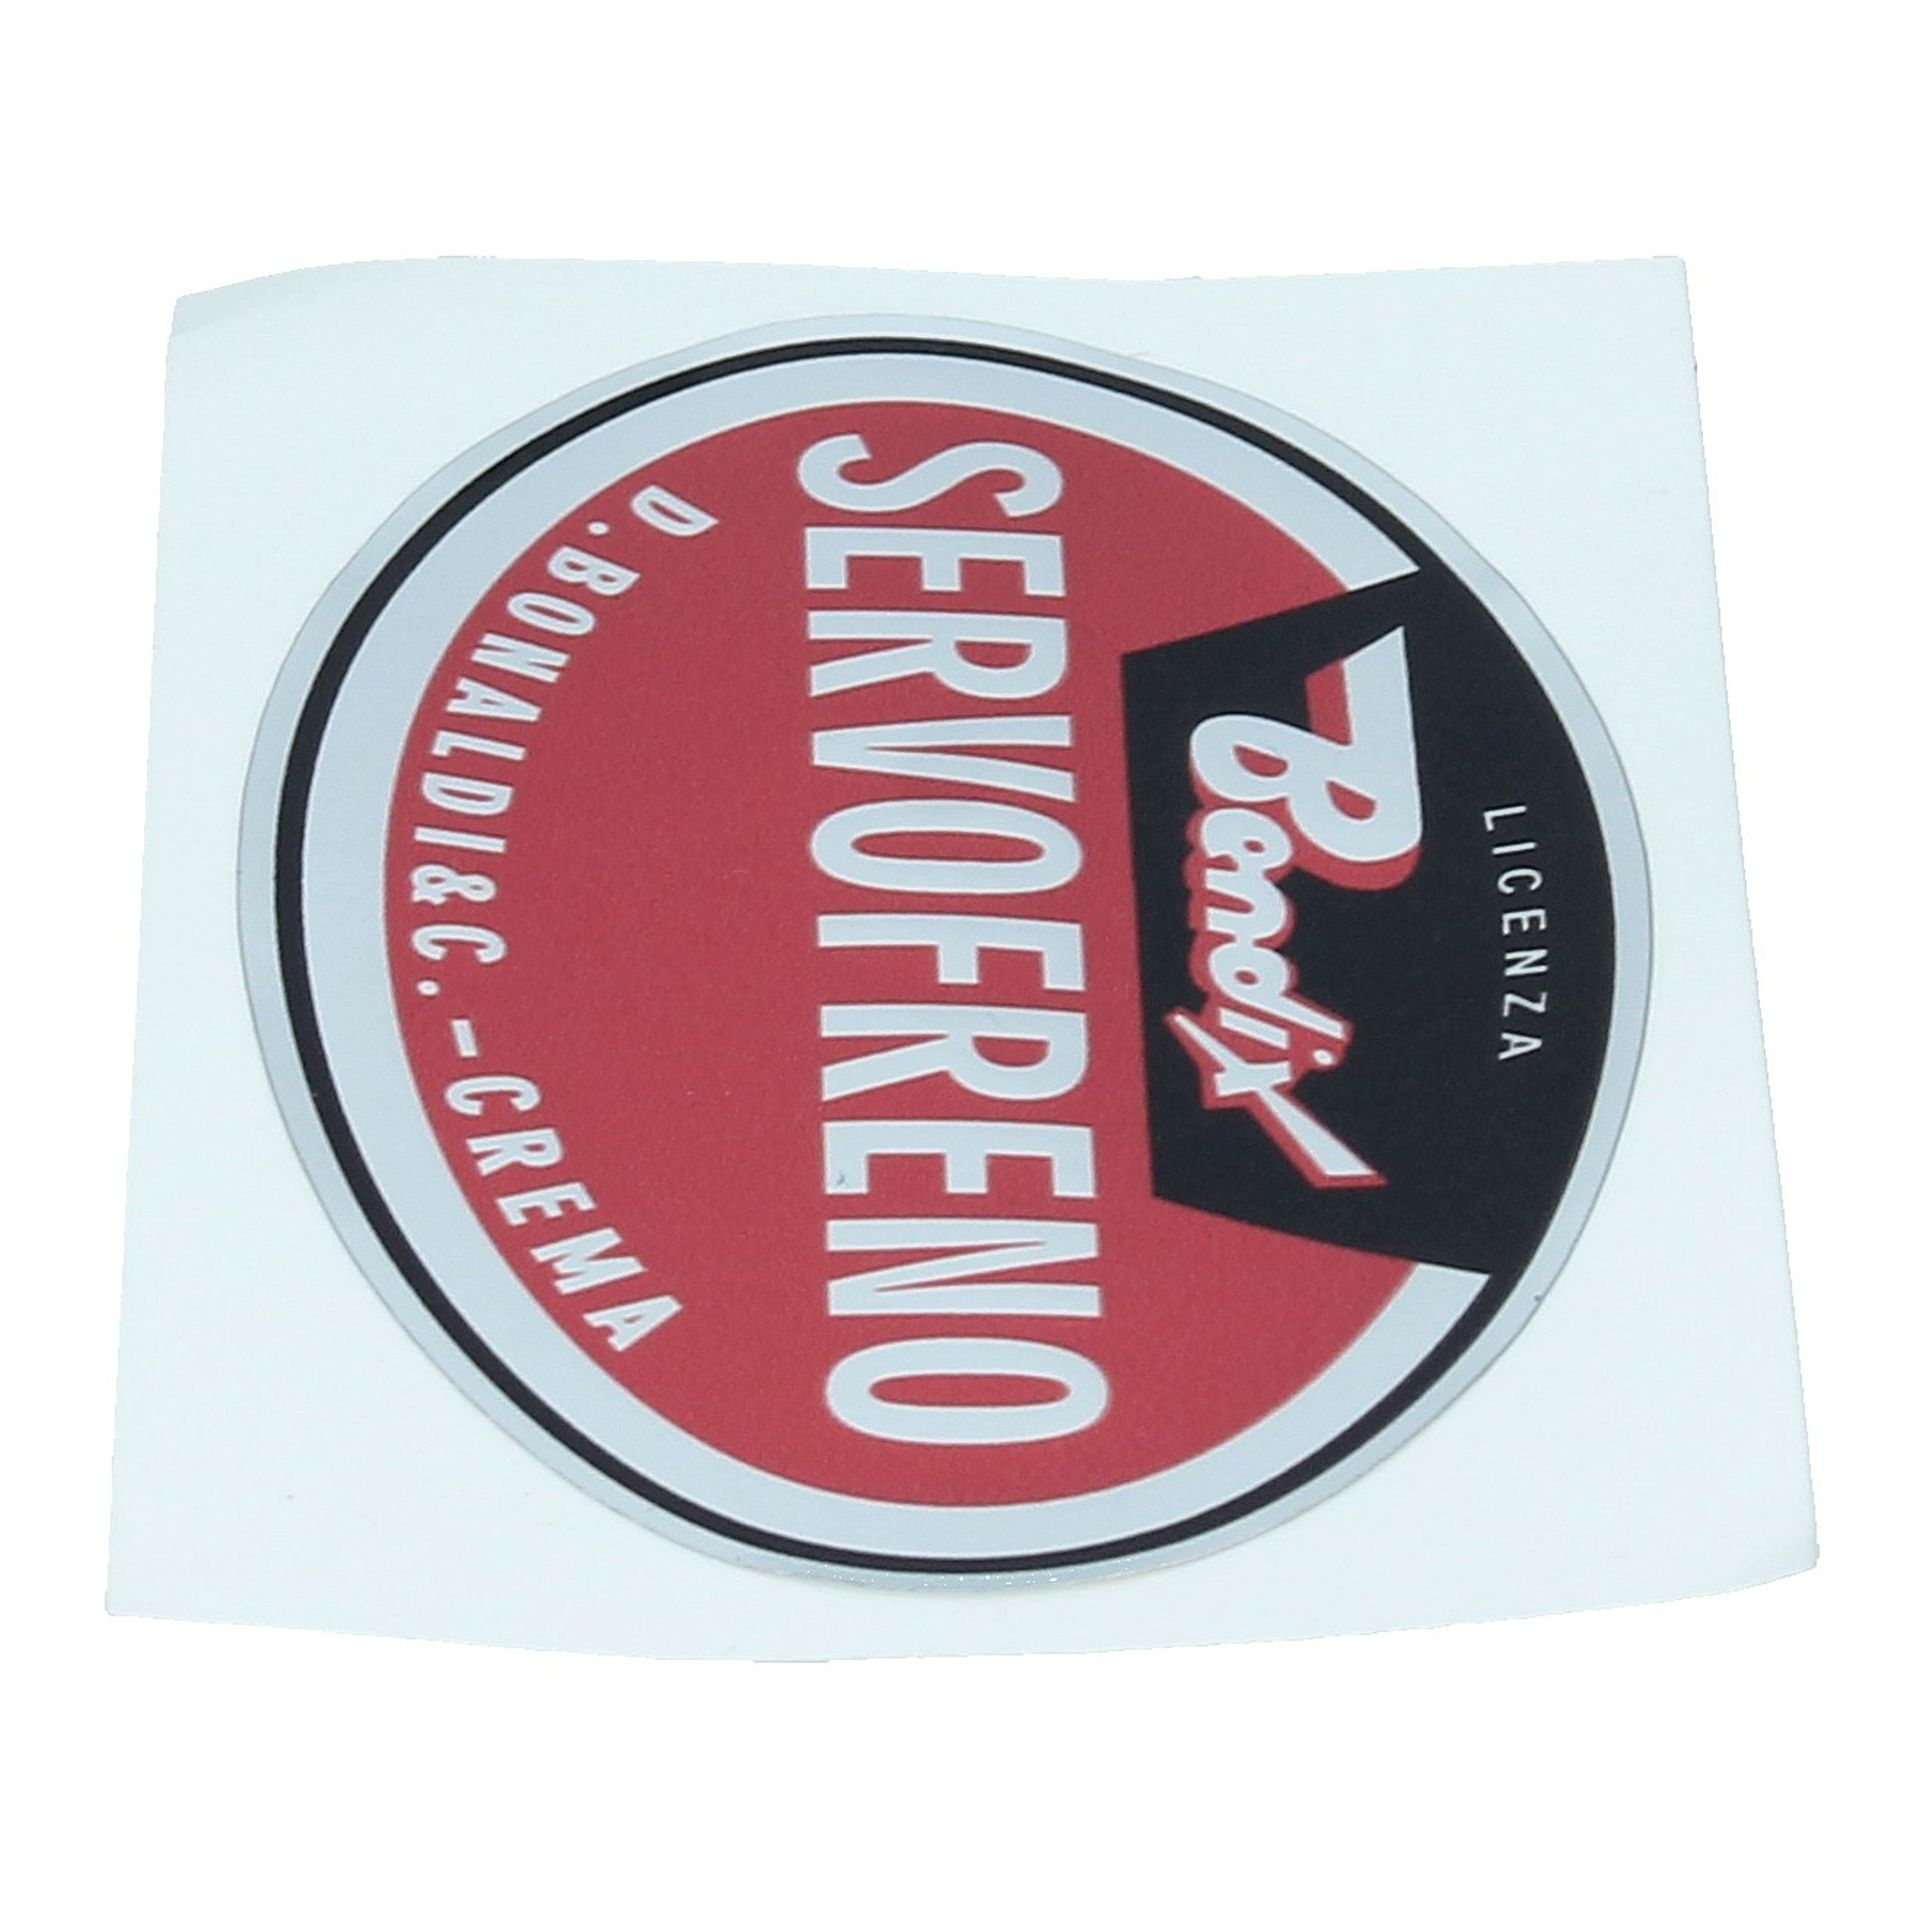 Servo Foil Sticker Bendix Servofreno